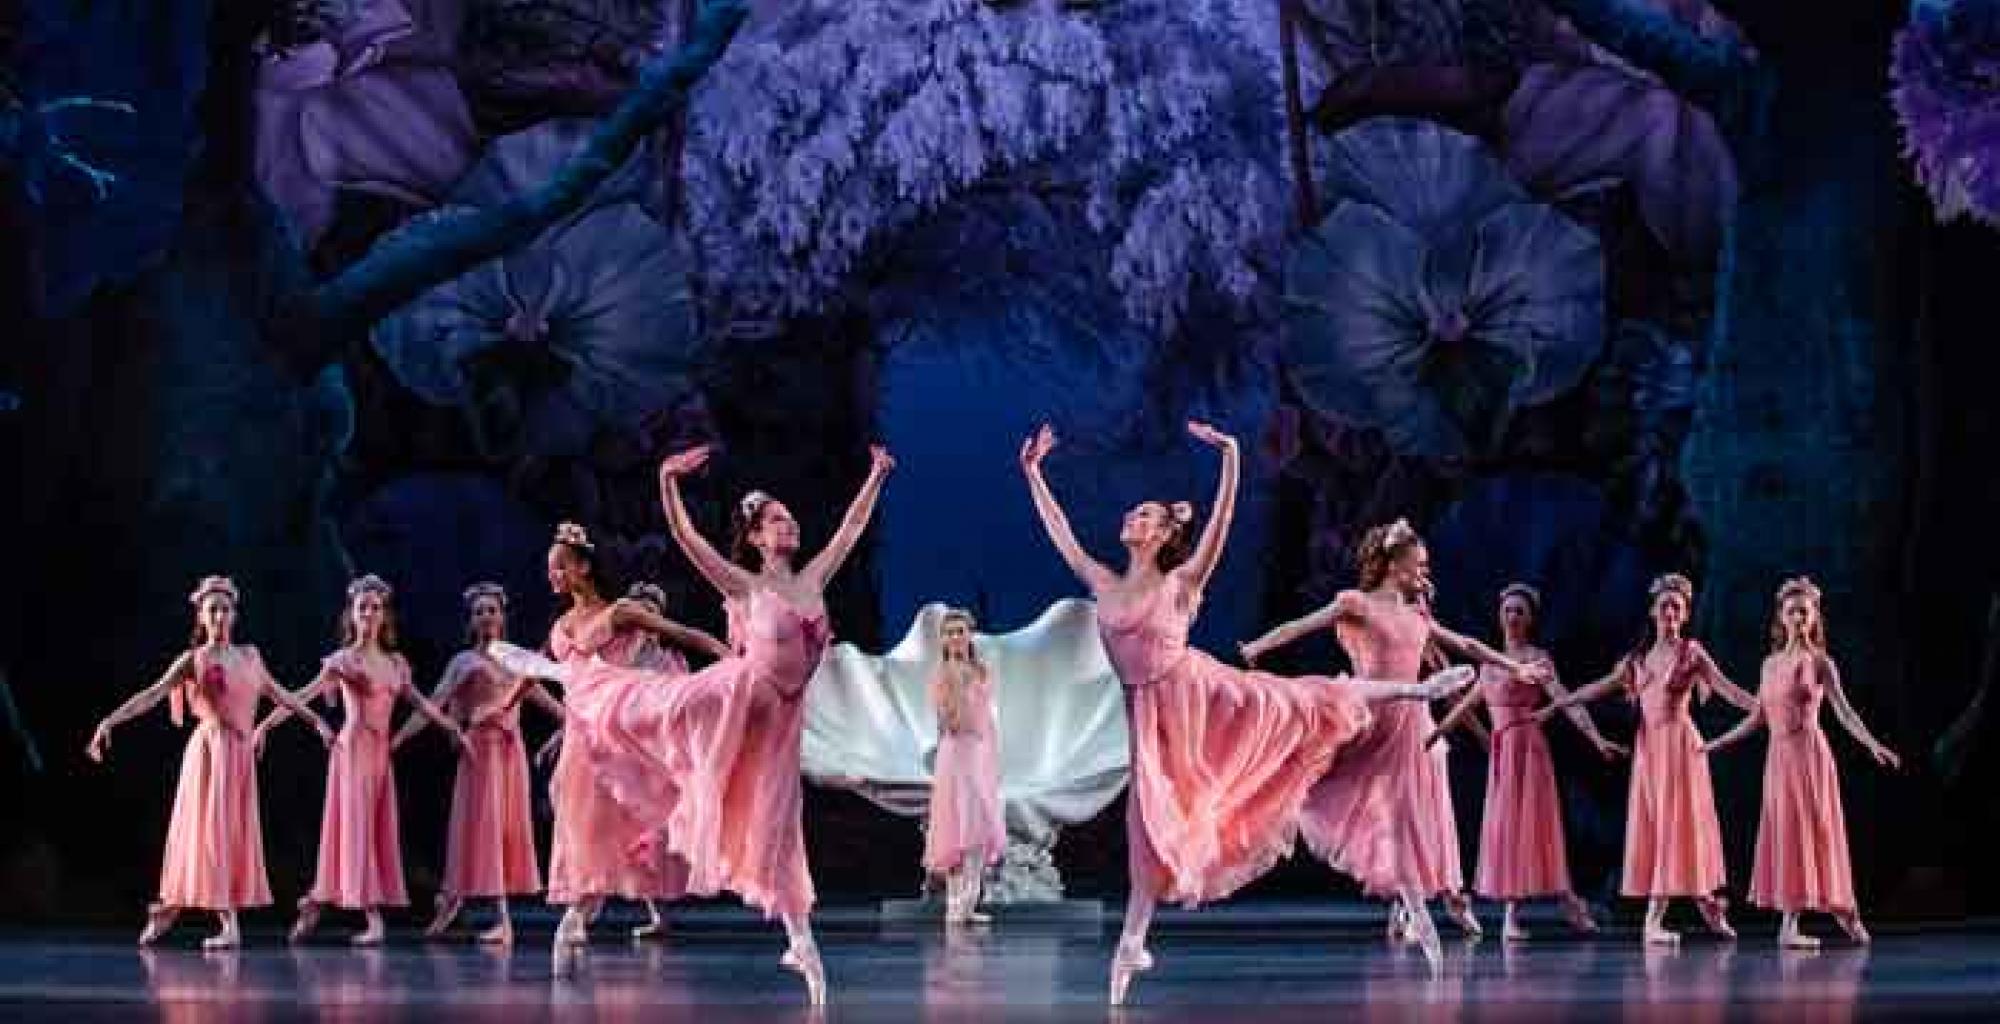 A Midsummer Night's Dream | Palace Opera & Ballet 2019/20 Season